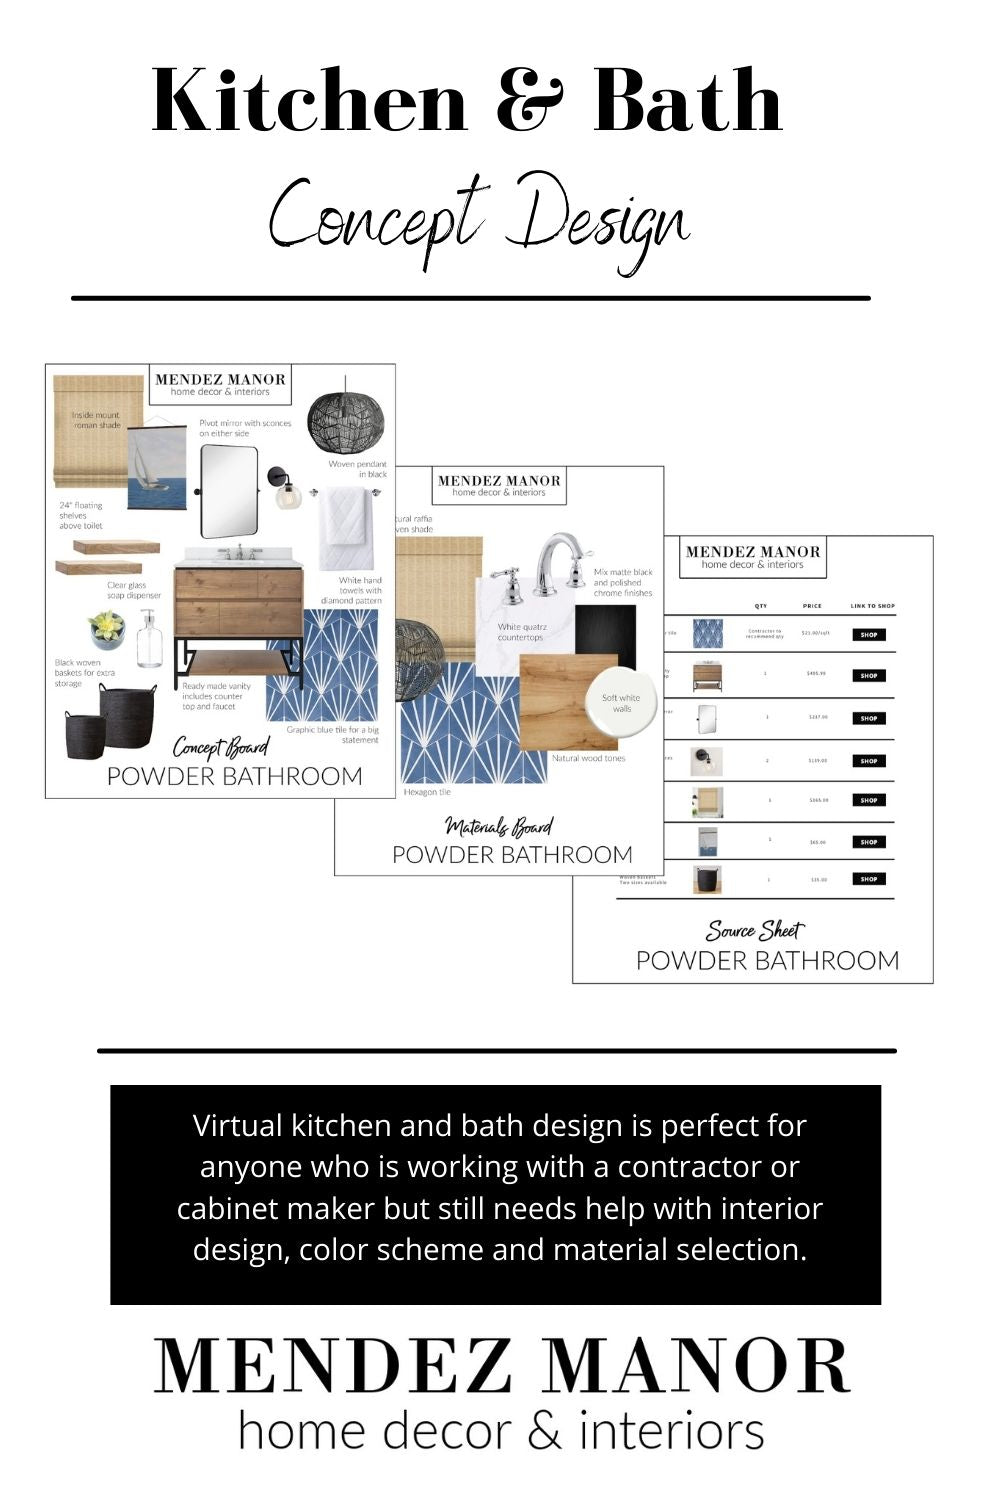 Kitchen & Bath Concept Design: Our New Virtual Design Package